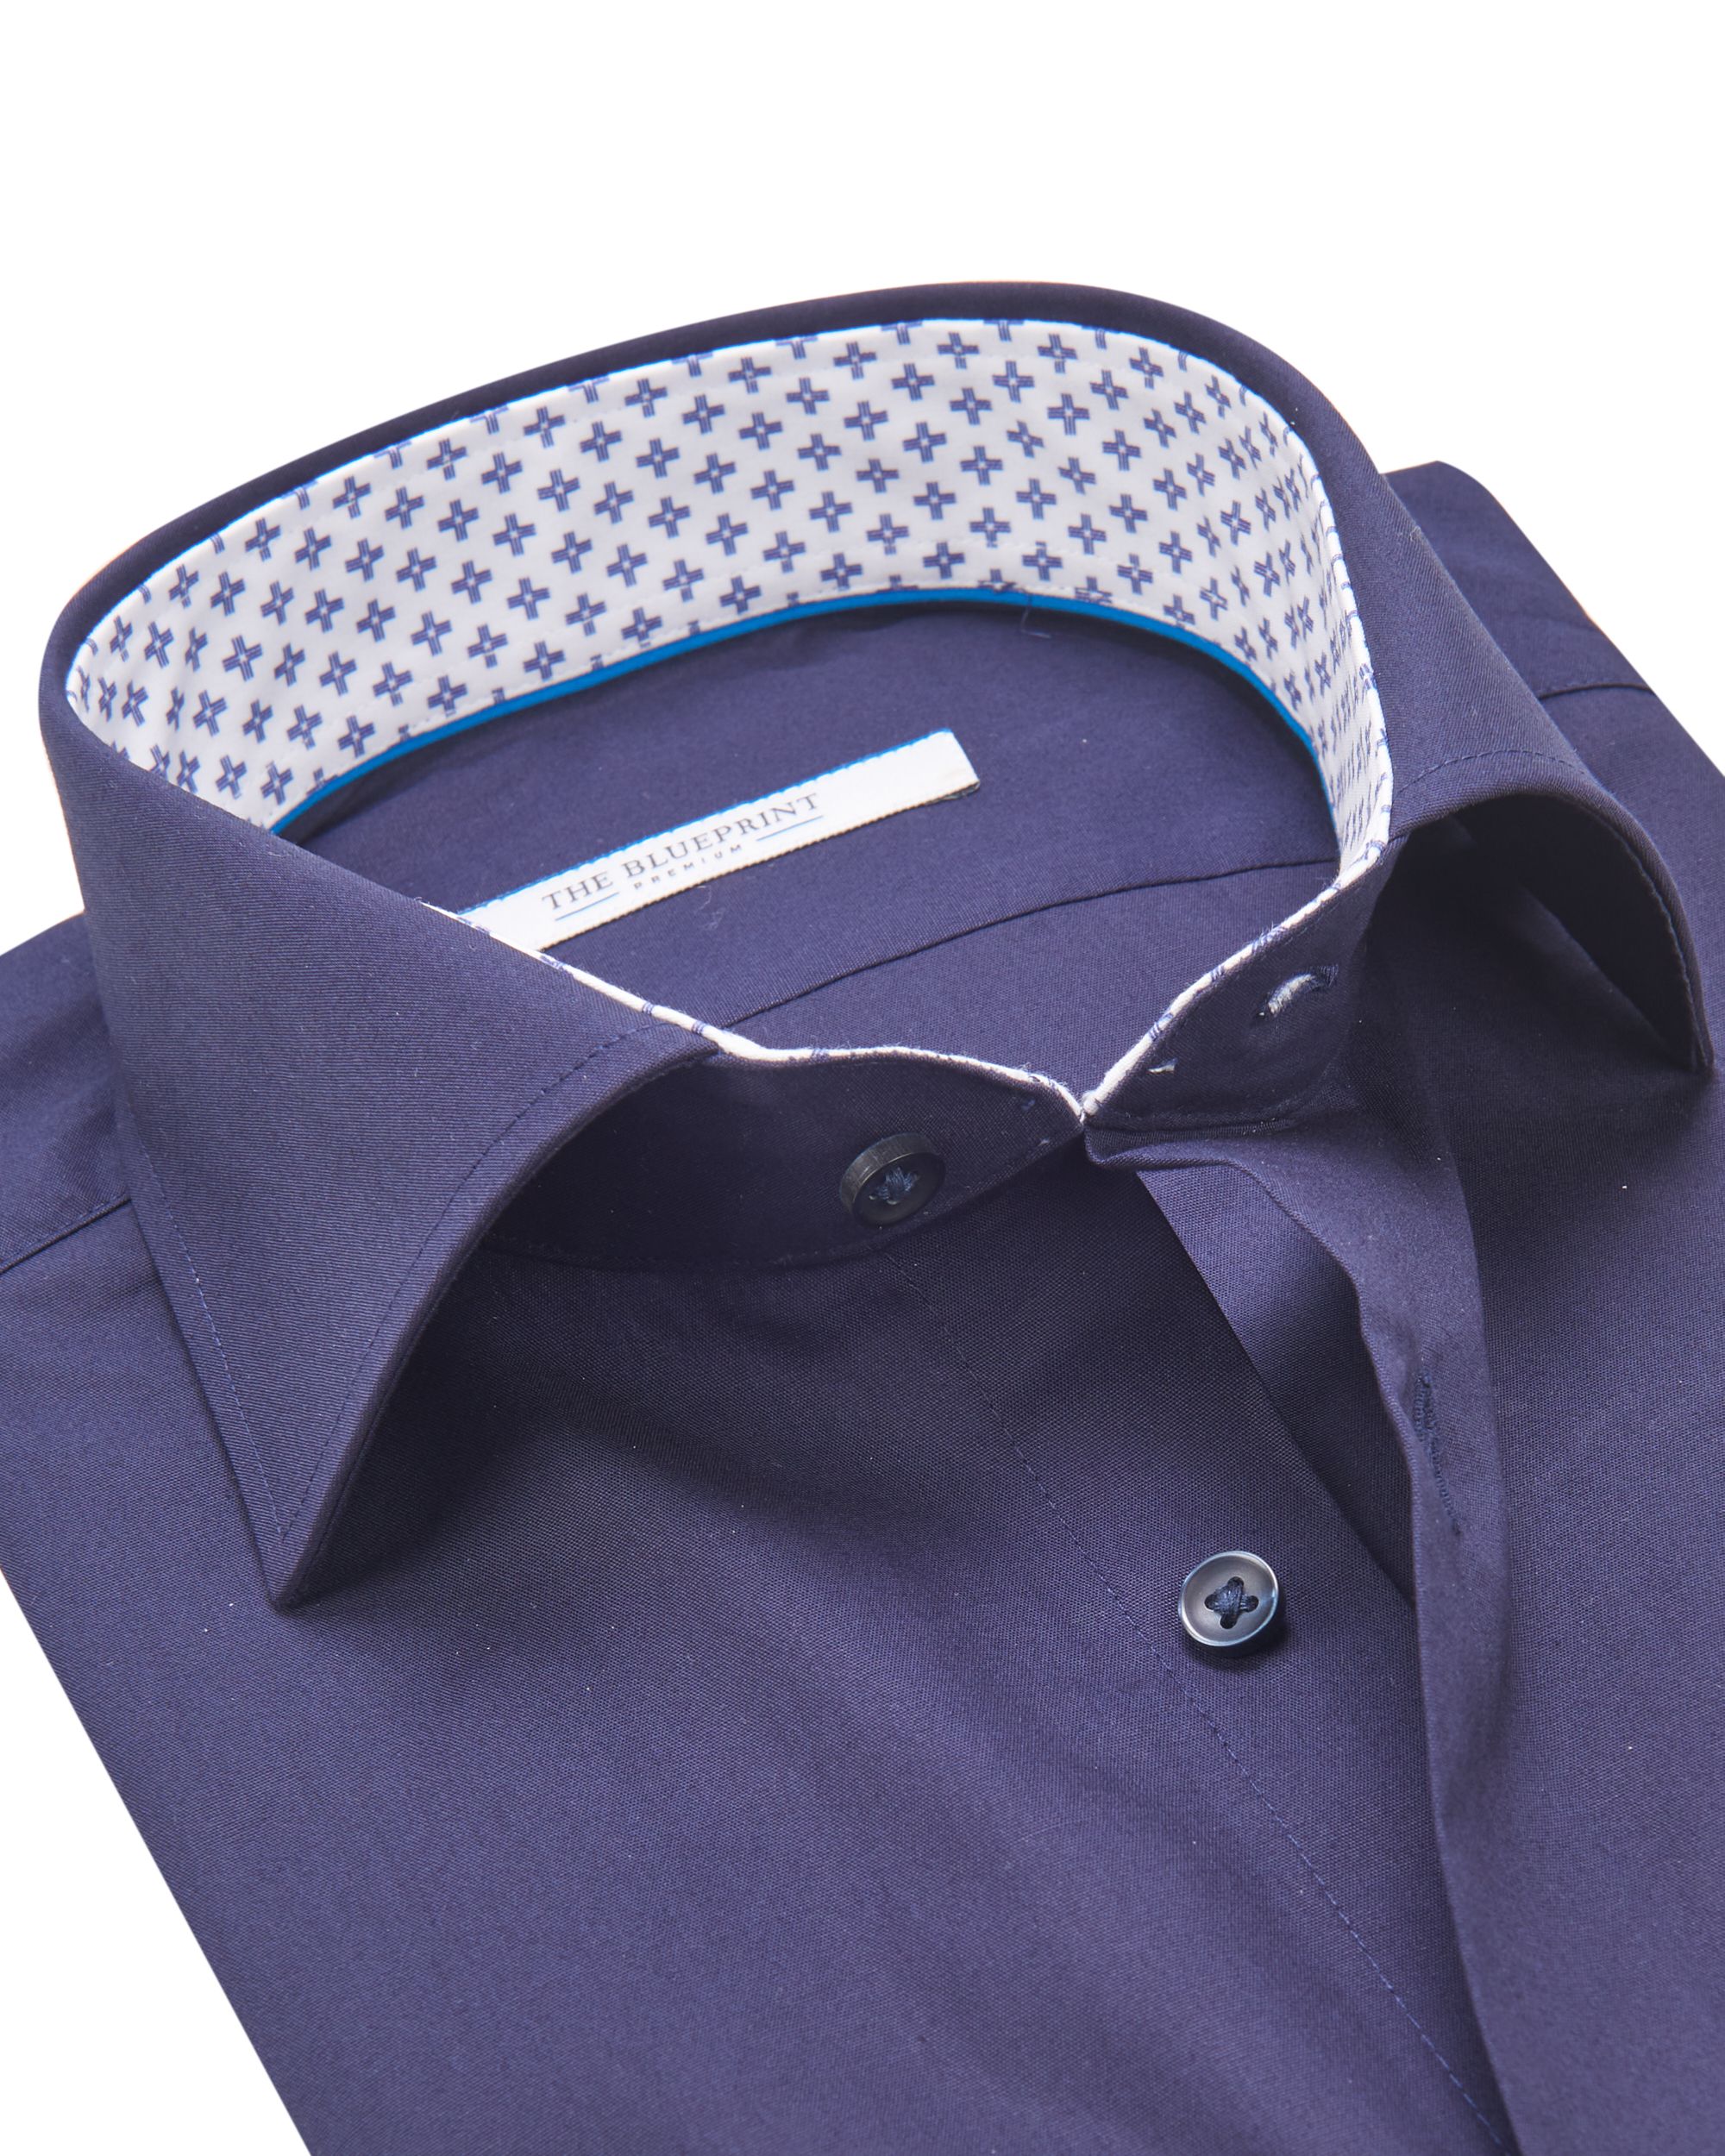 The BLUEPRINT Premium Casual Overhemd LM NAVY 082249-001-L